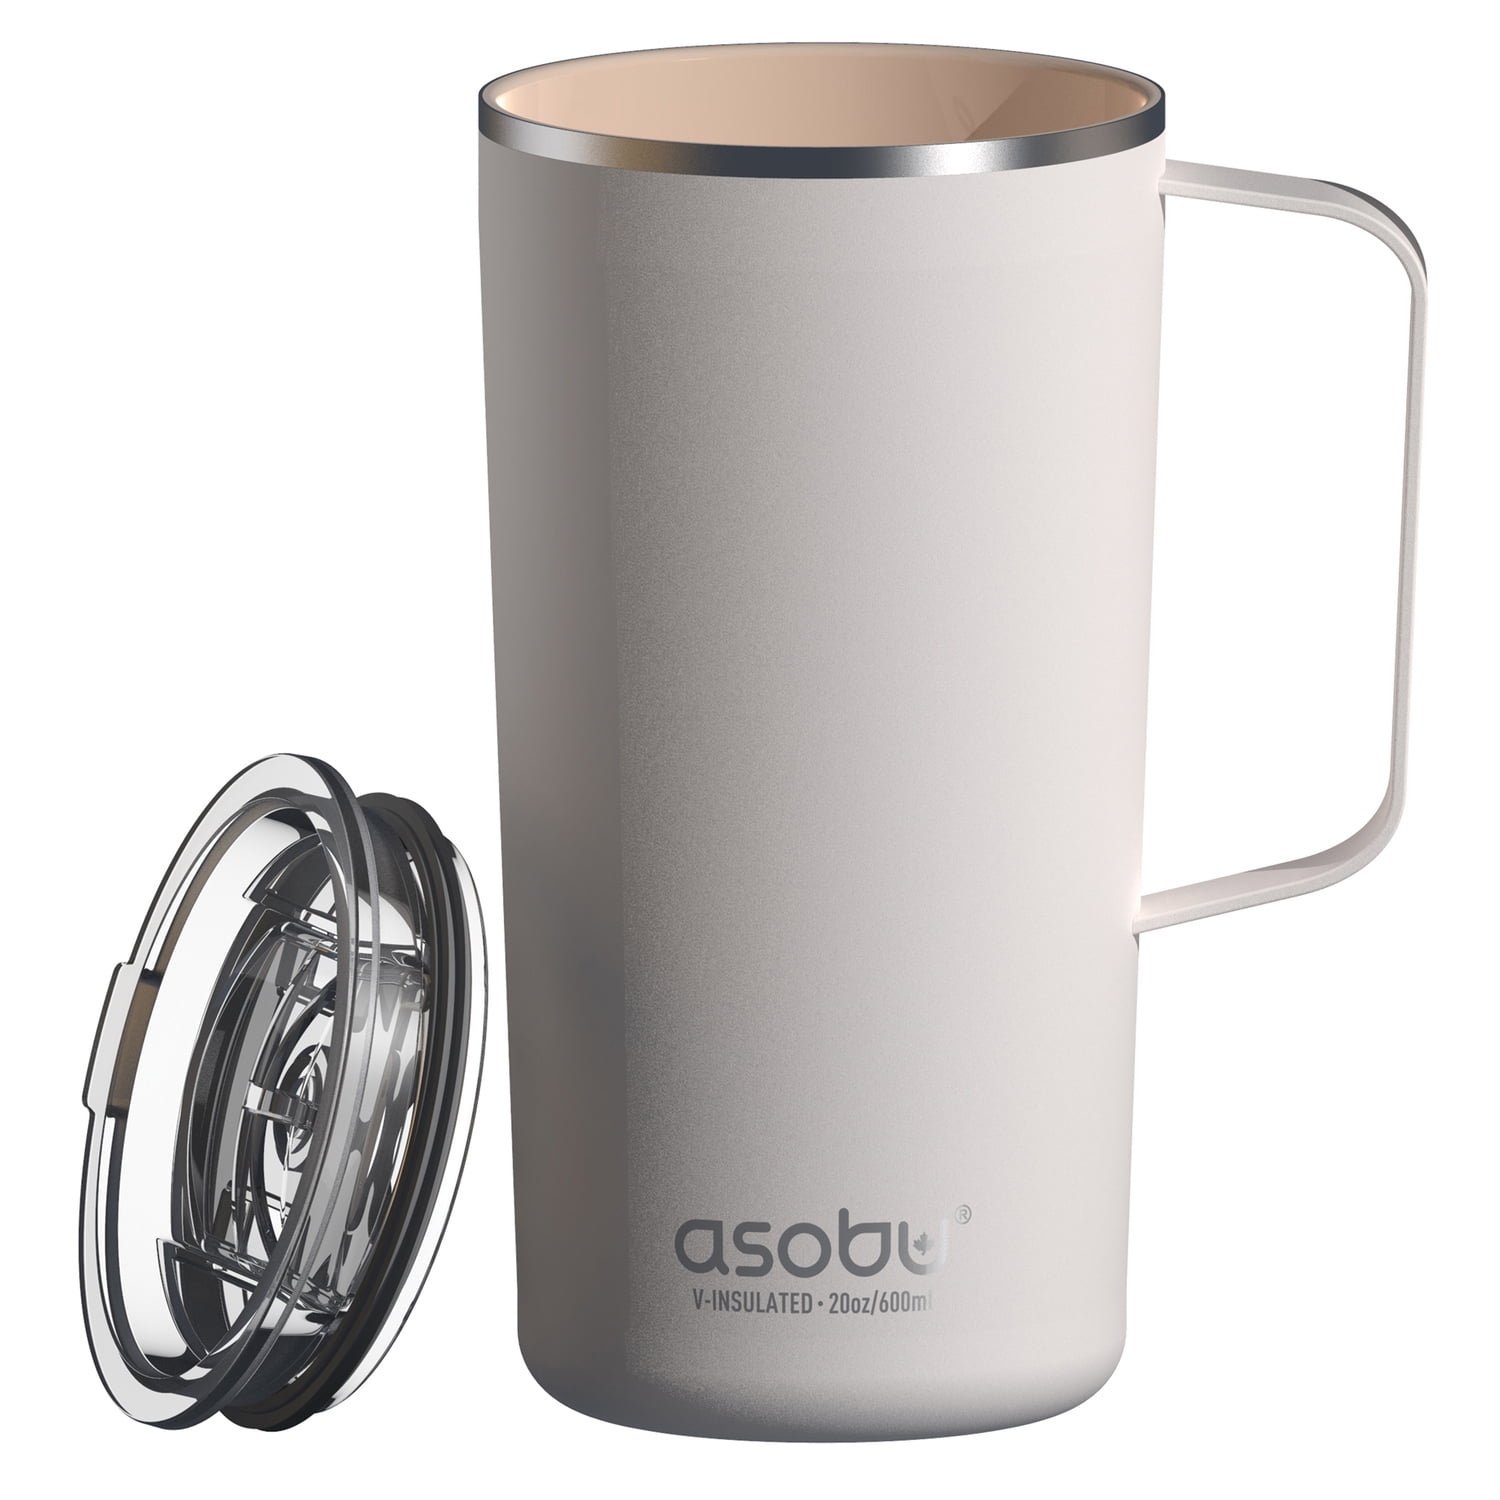 Asobu Manhattan Insulated Stainless Steel Coffee Mug - Large 17 Oz